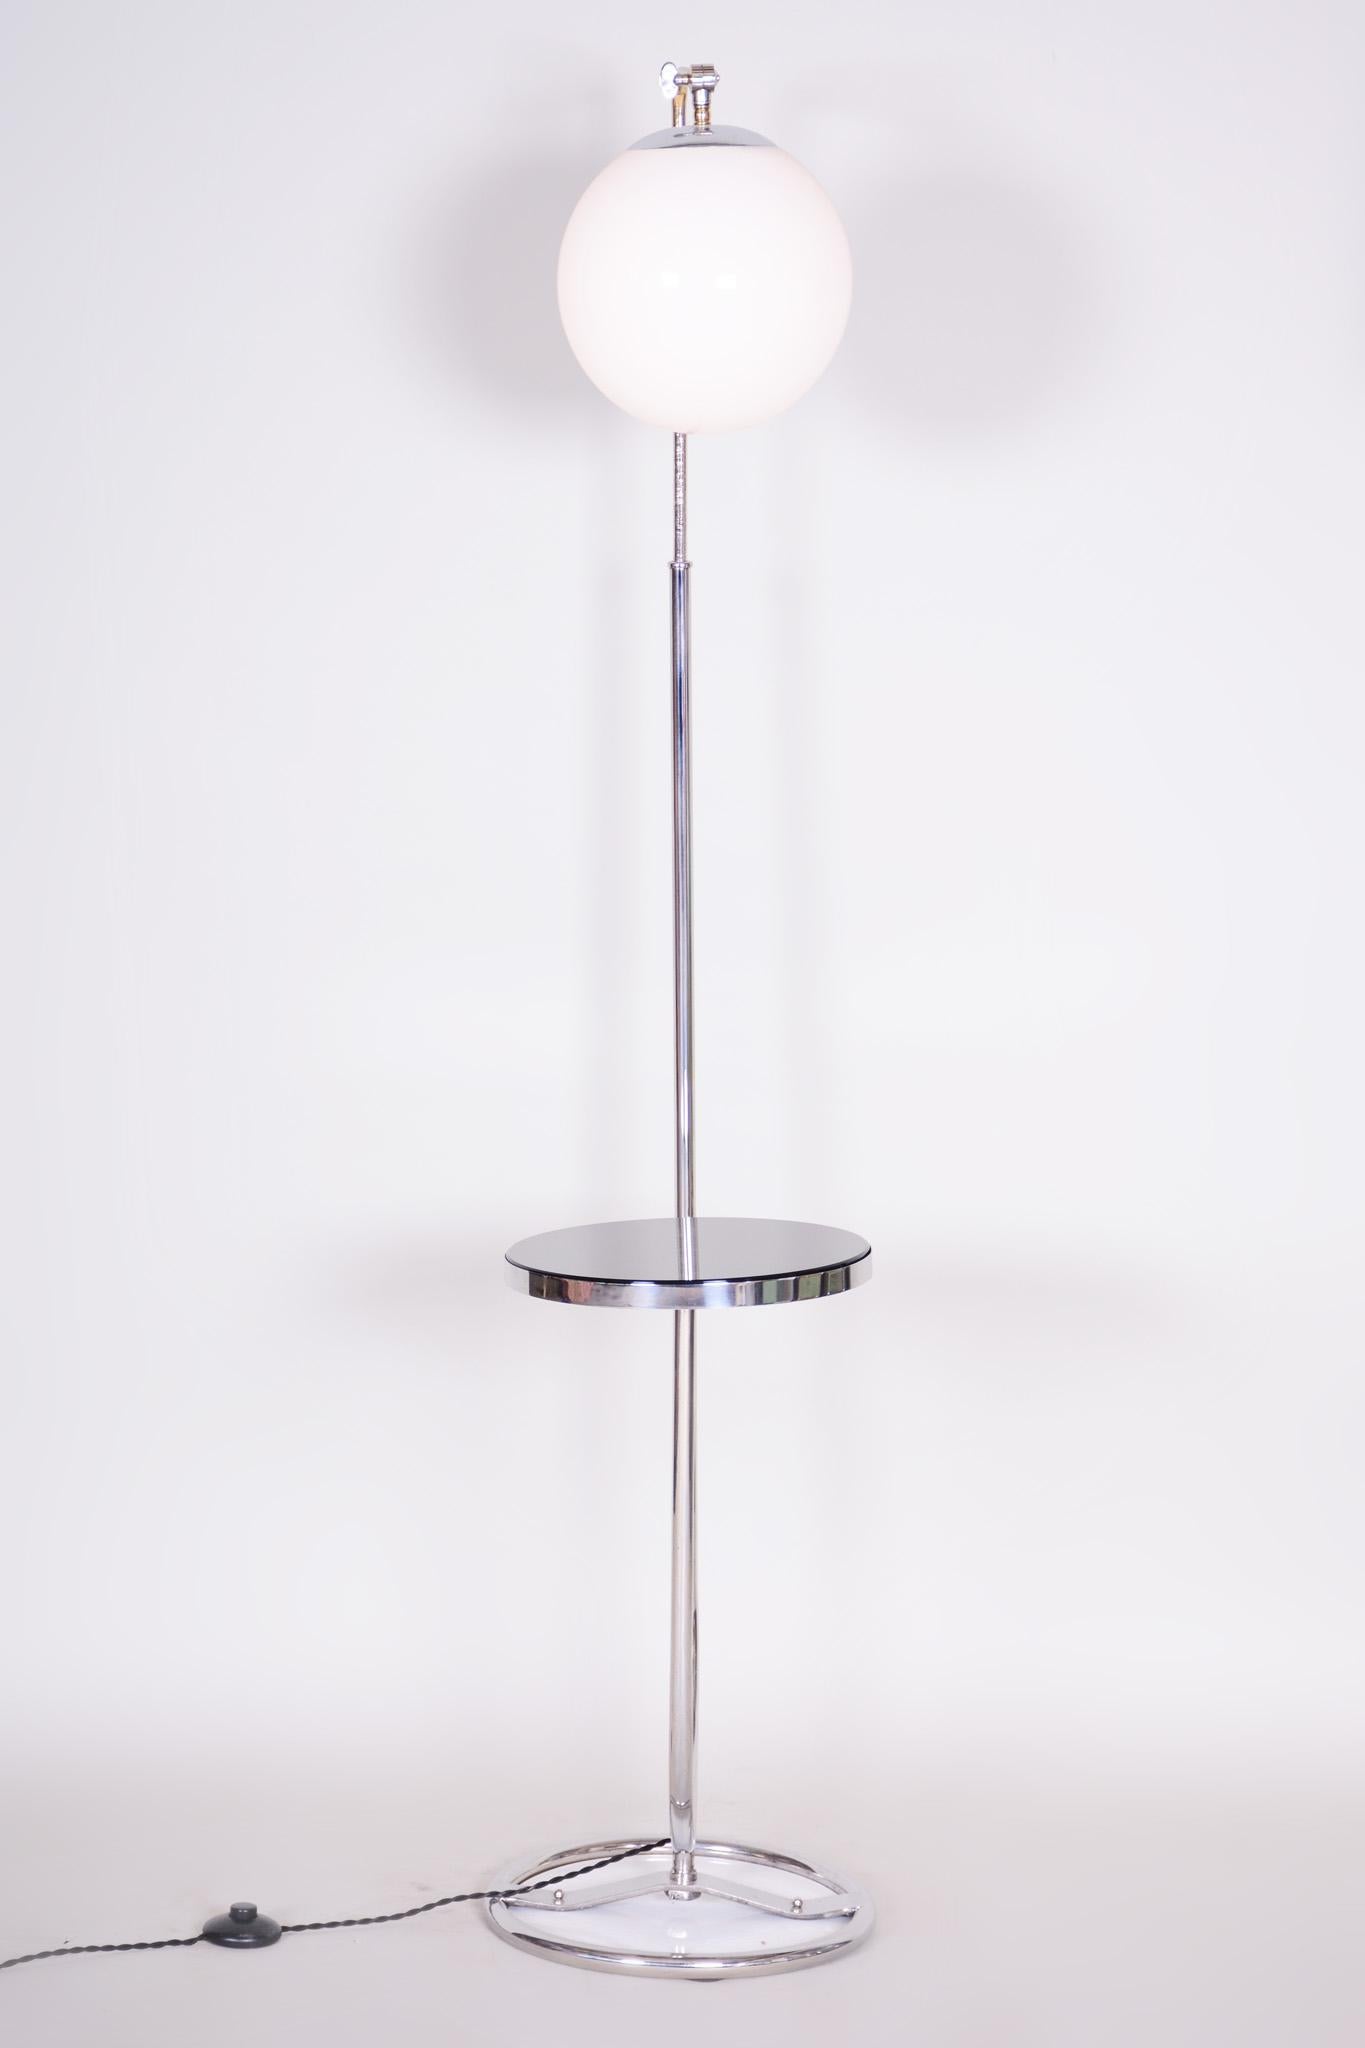 20th century floor lamp by Mücke - Melder

Style: Bauhaus.
Period: 1930-1939.
Material: Chrome, glass, milk glass.